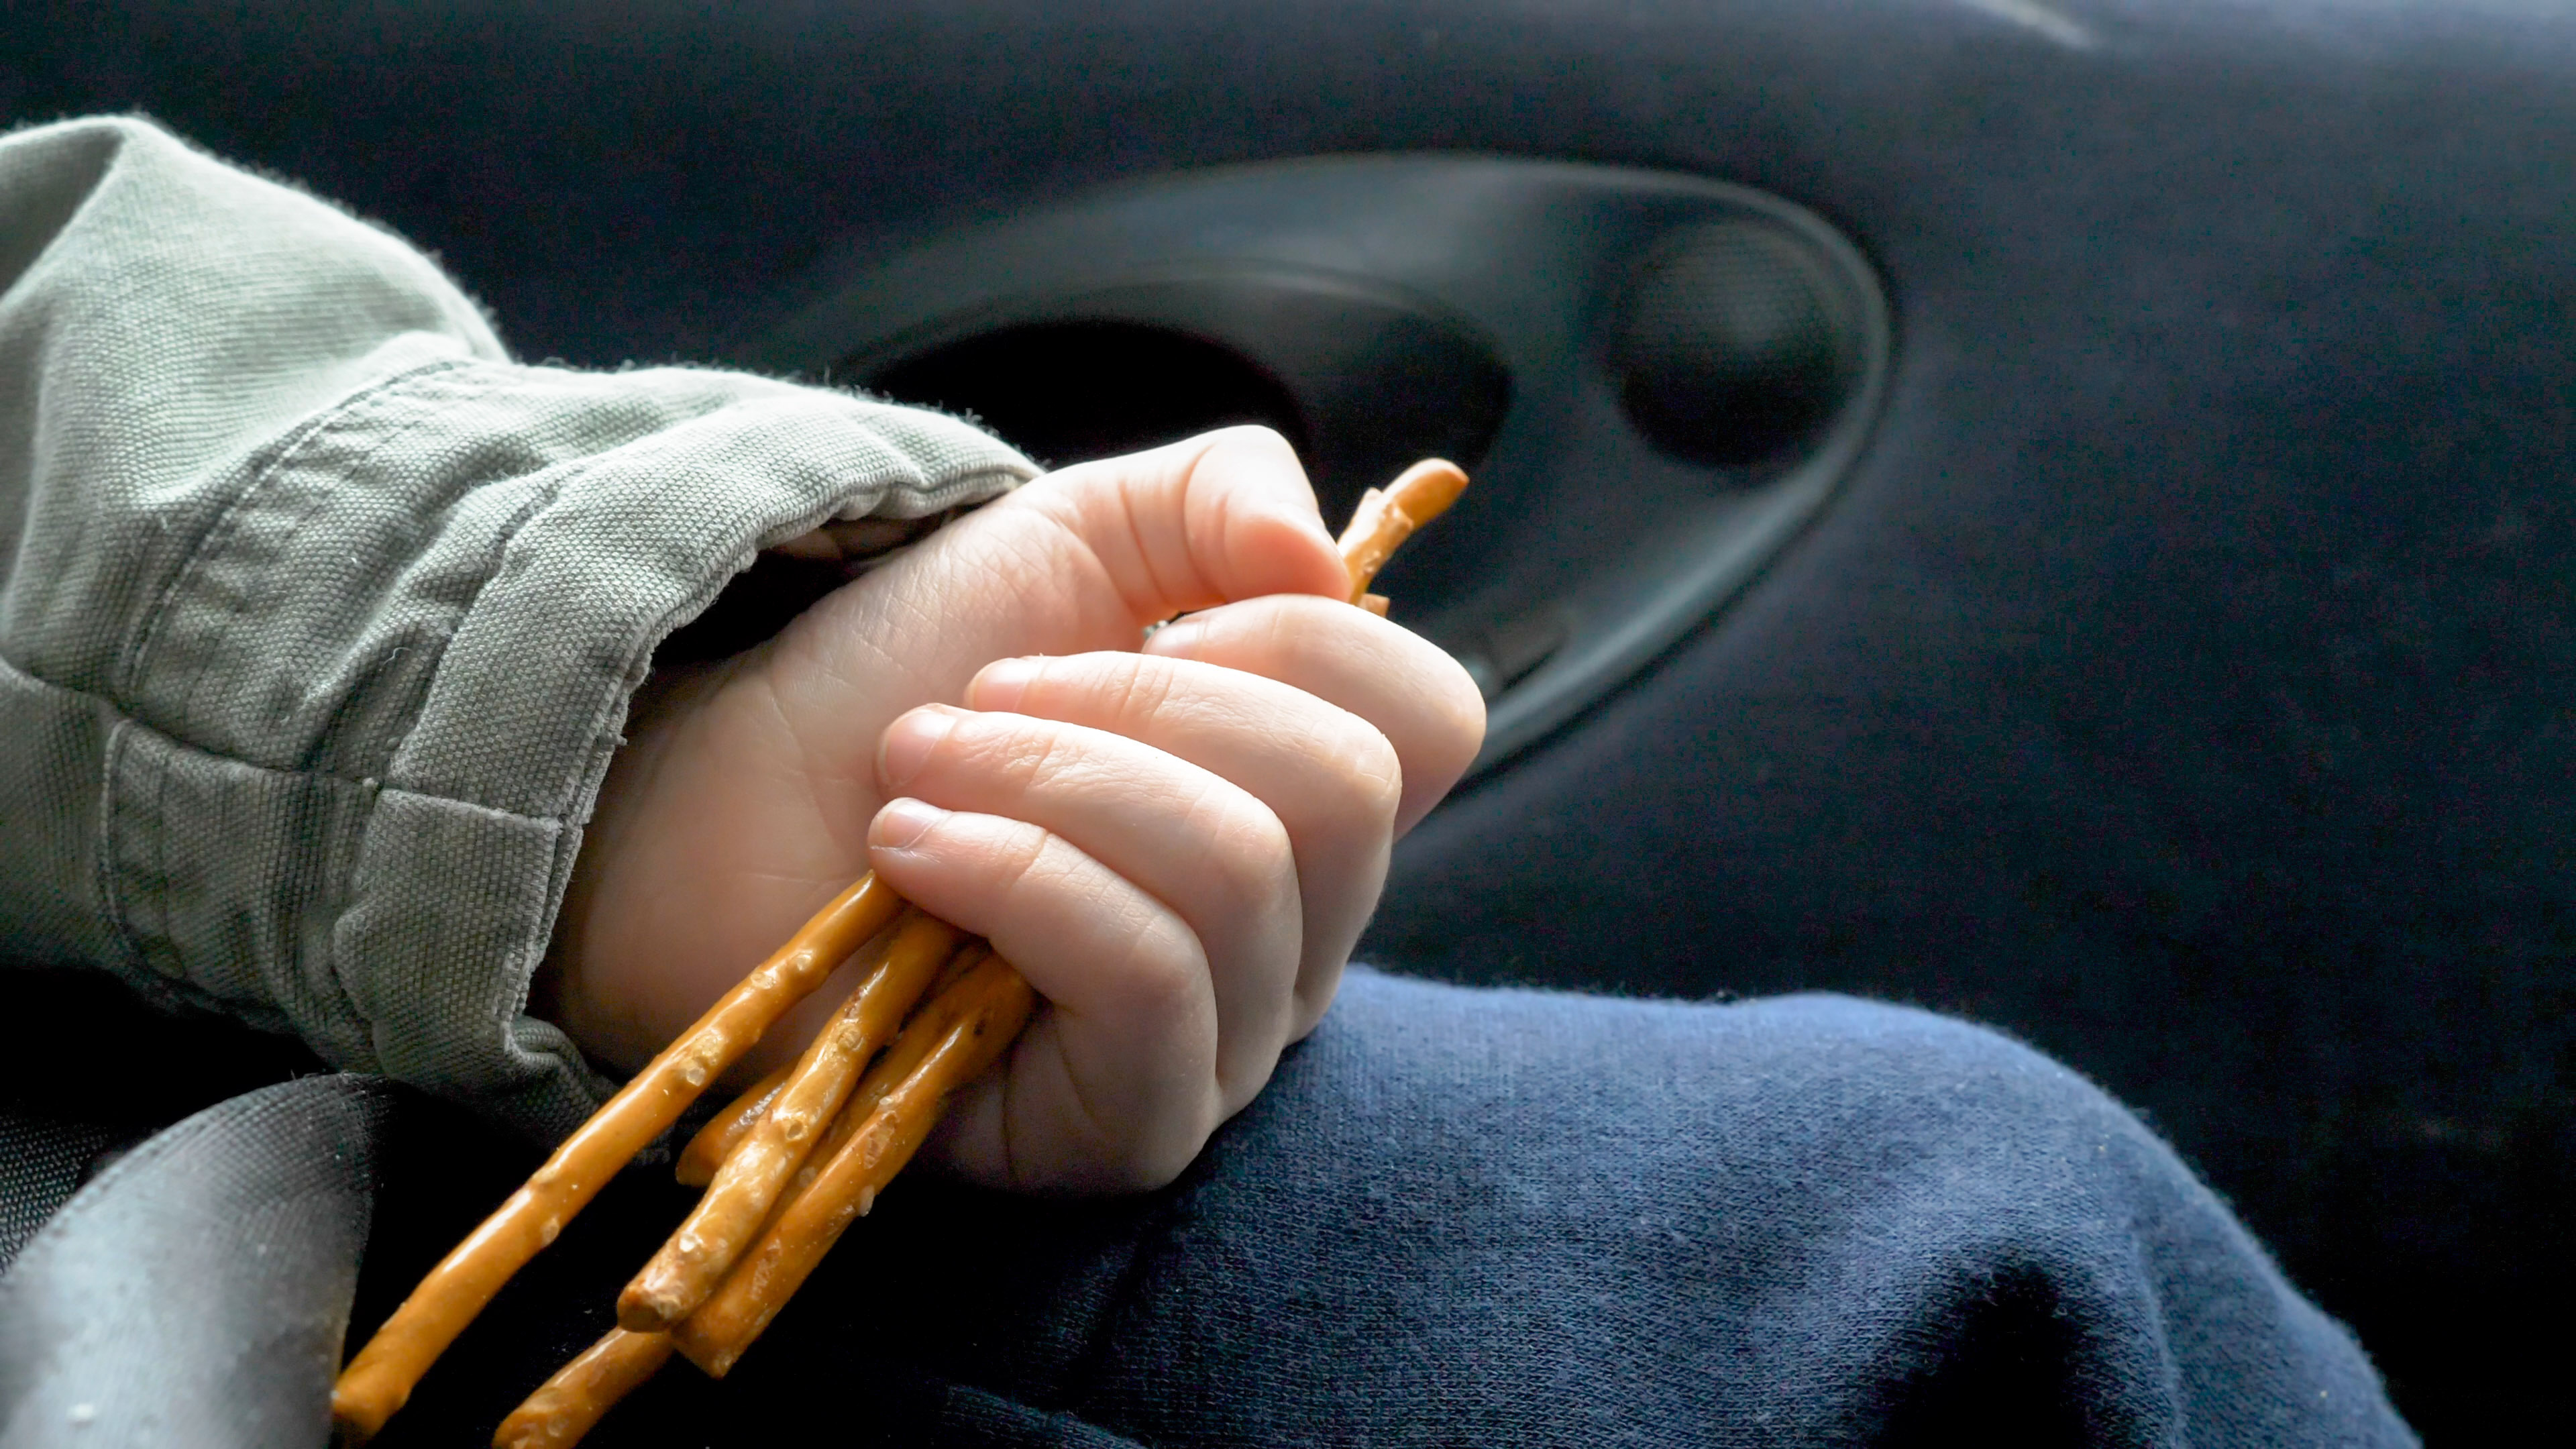 Child&#x27;s hand clutching pretzel sticks while sitting in a car seat